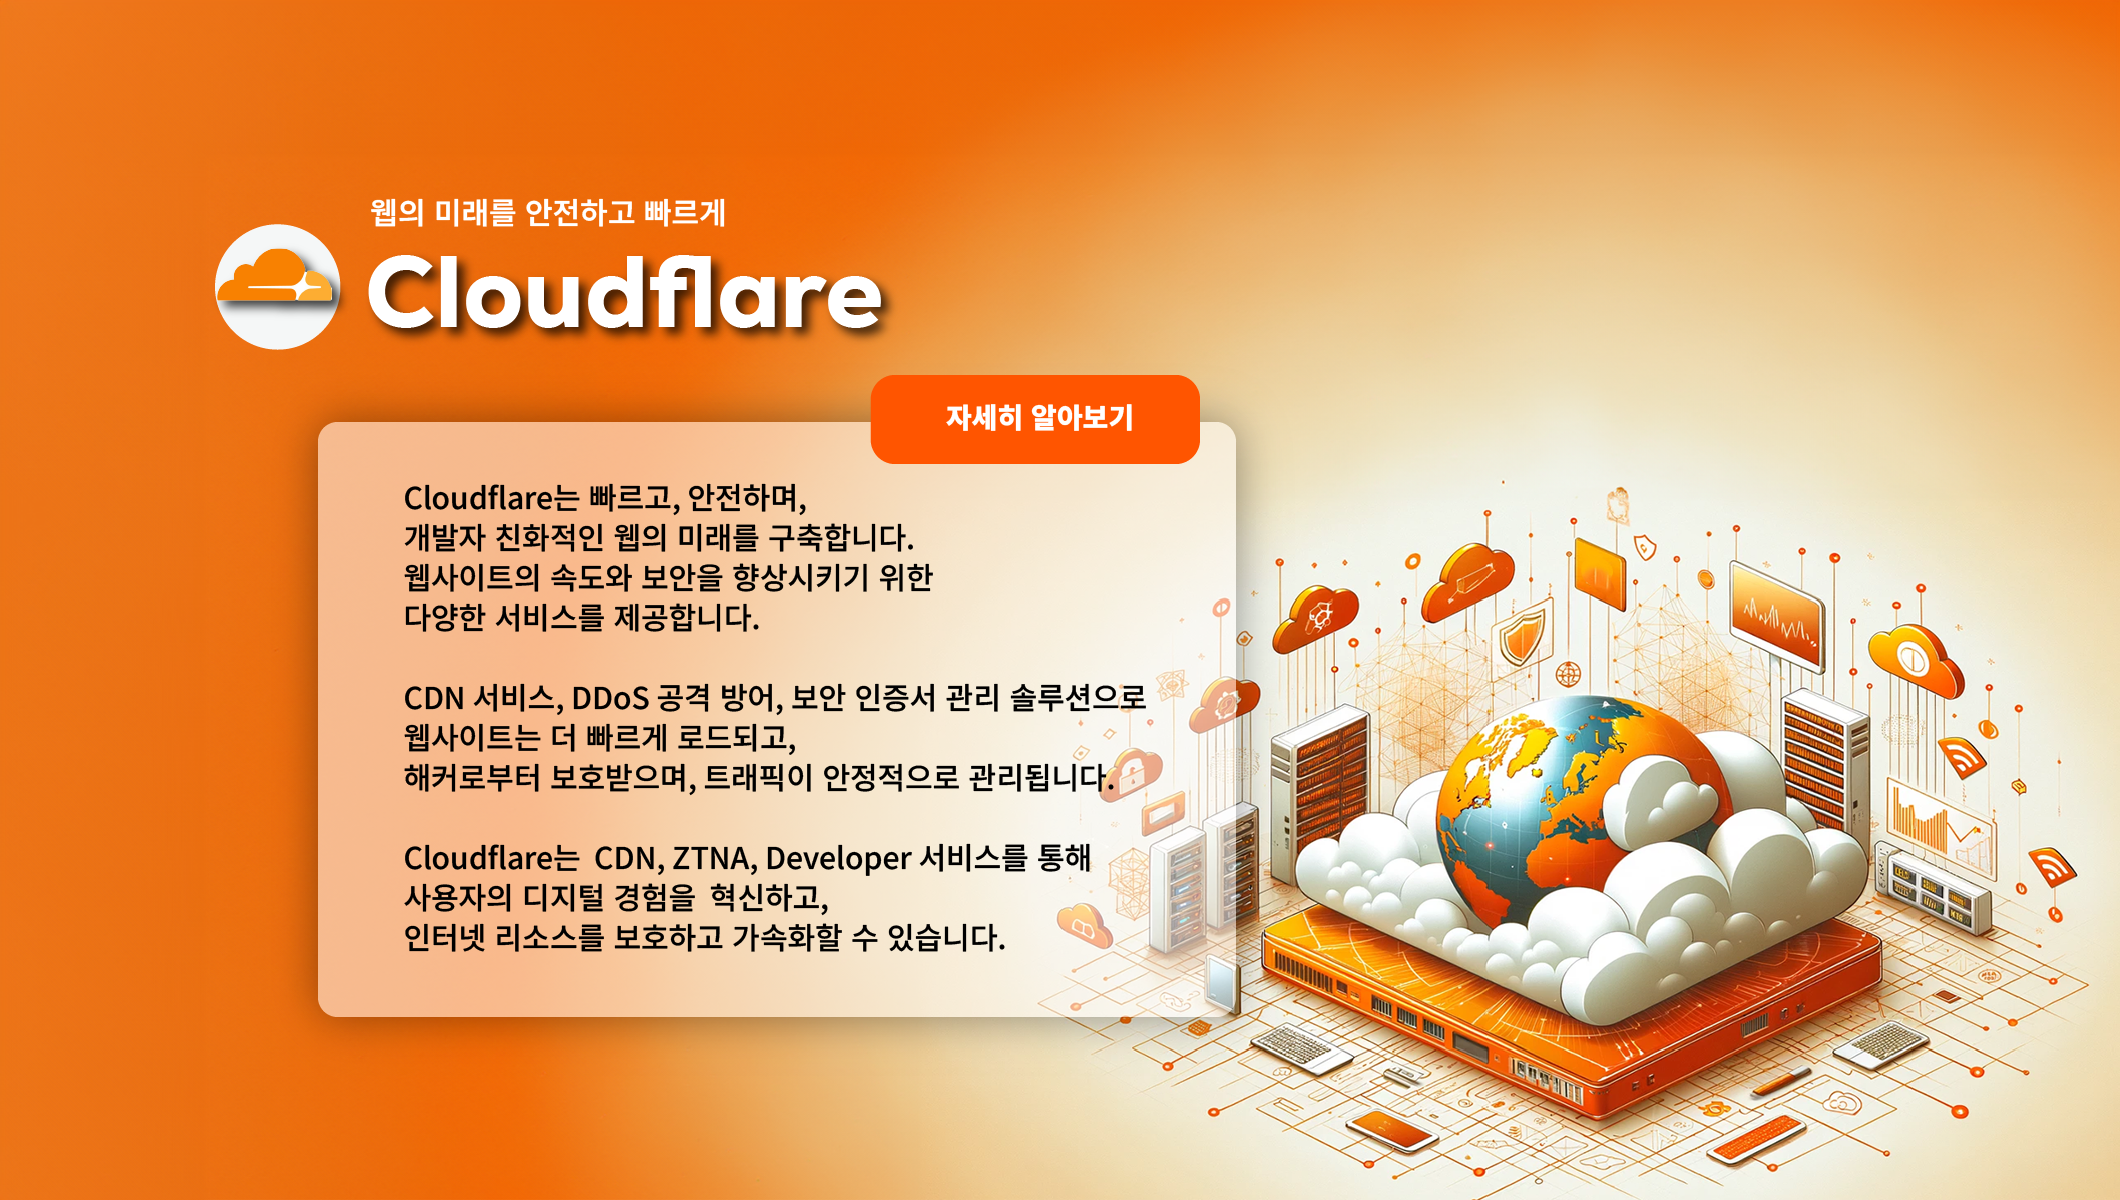 CloudFlare main